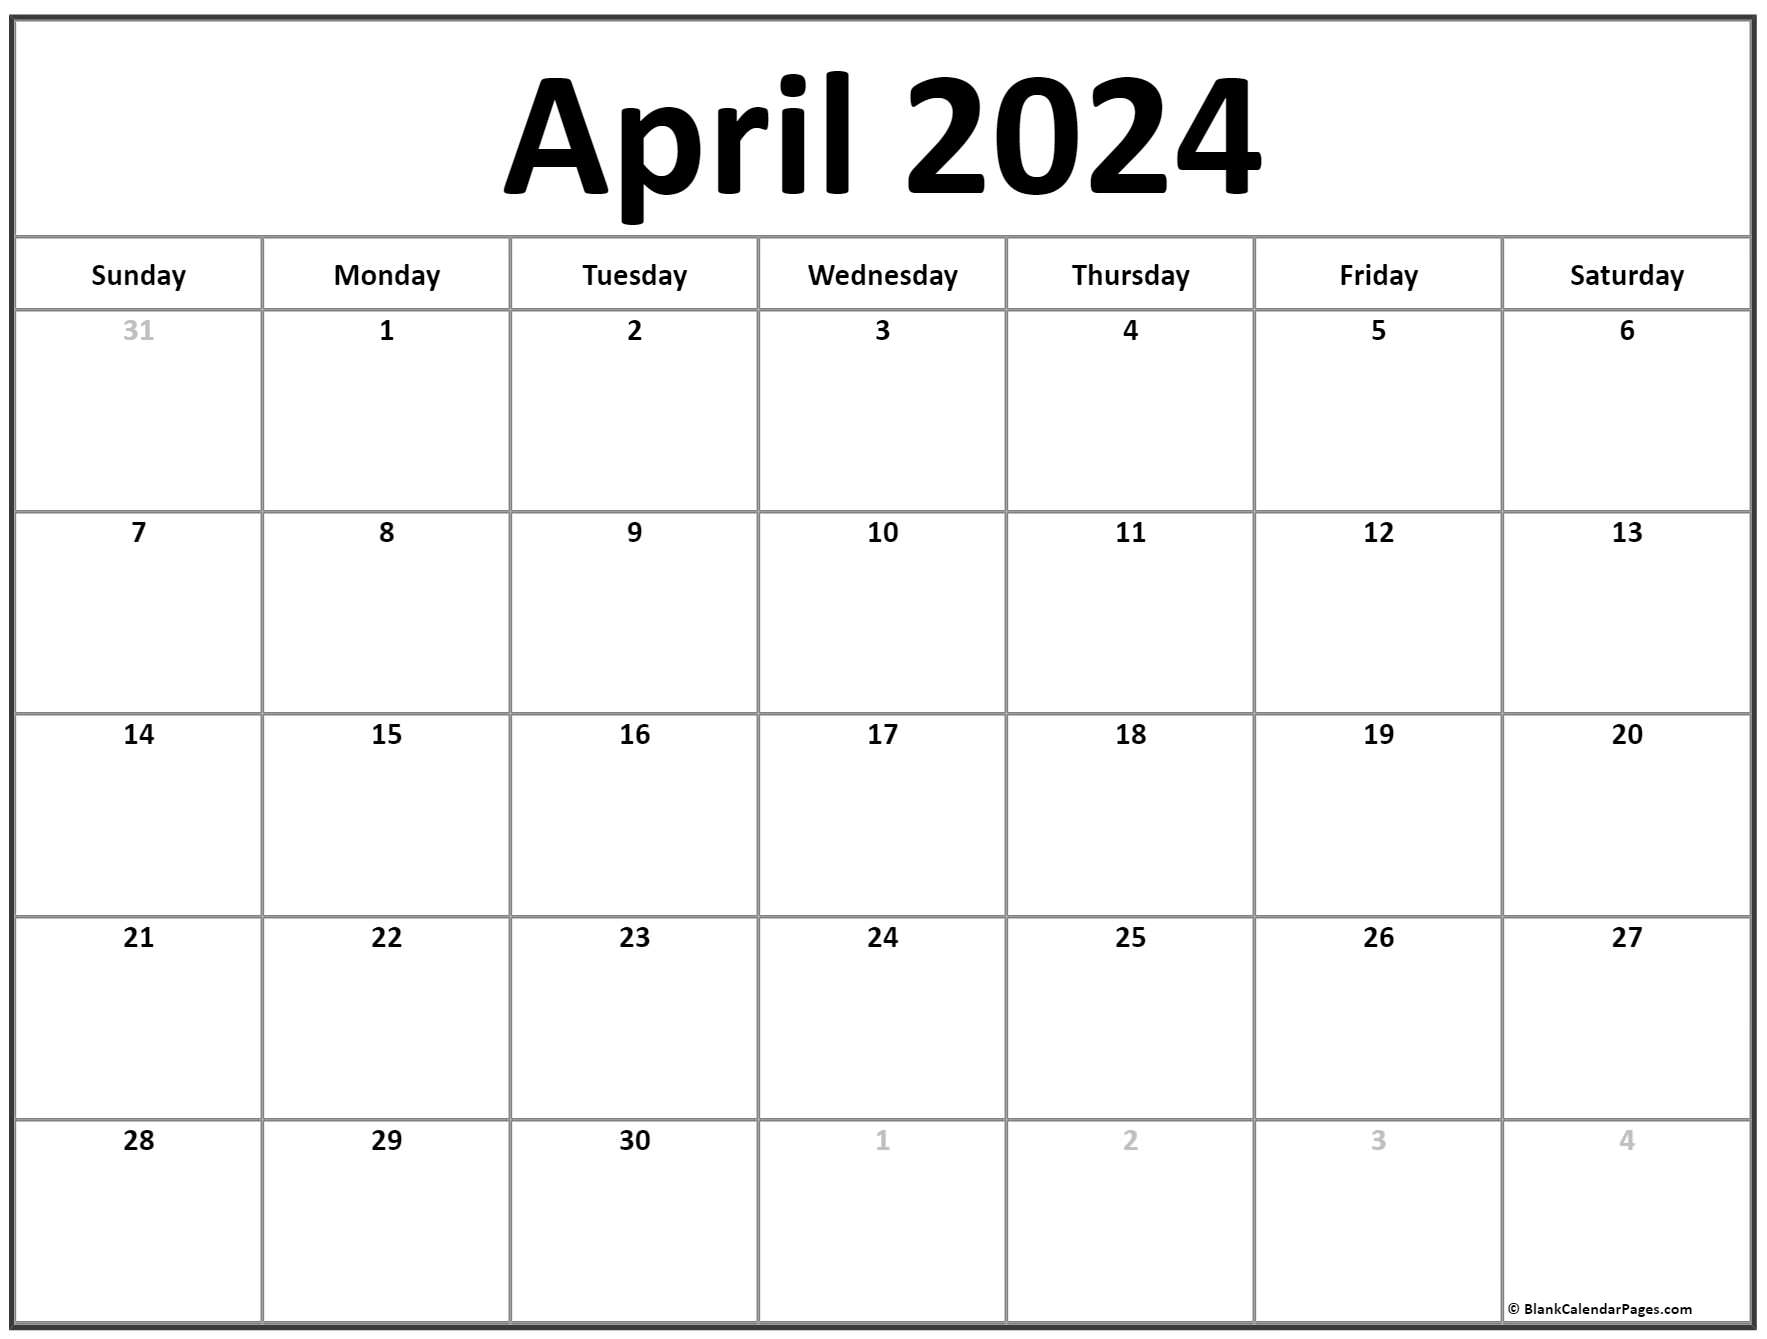 april-2023-calendar-instant-download-monthly-planner-digital-ubicaciondepersonas-cdmx-gob-mx